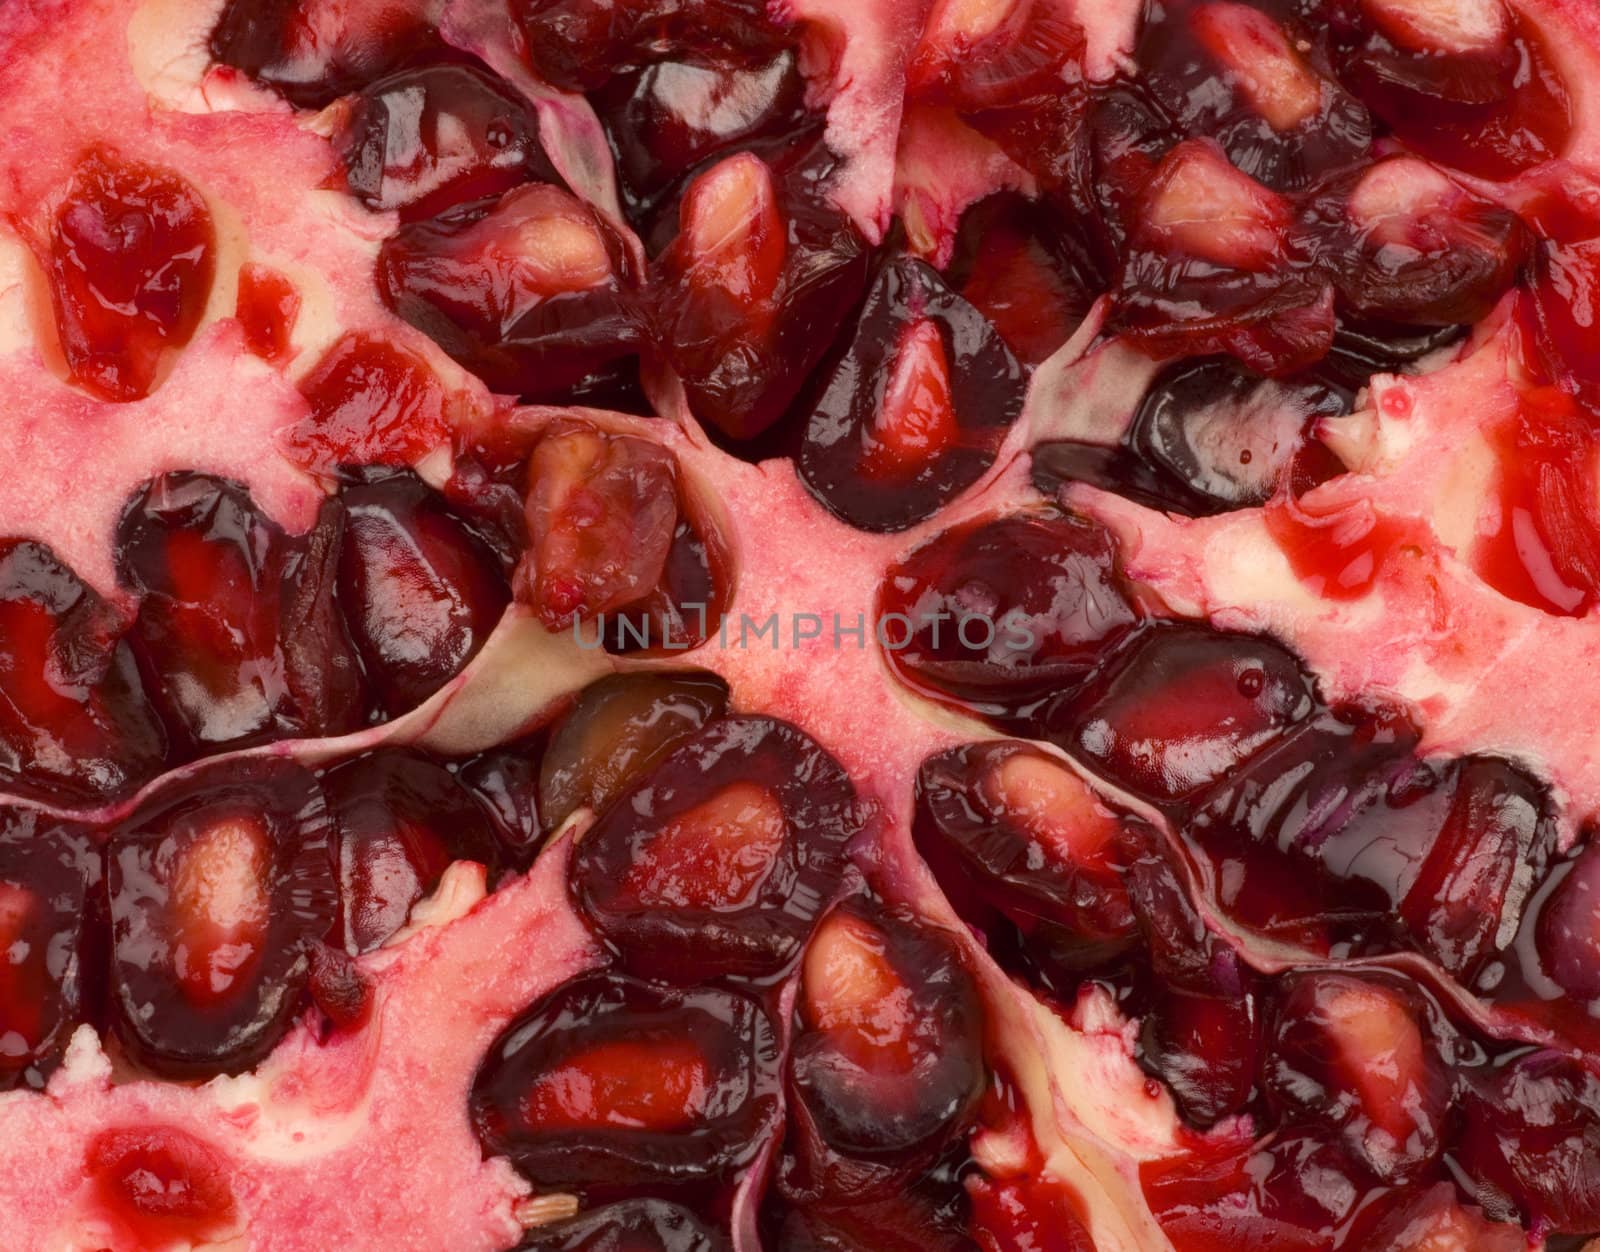 A close up of a pomegranate fruit